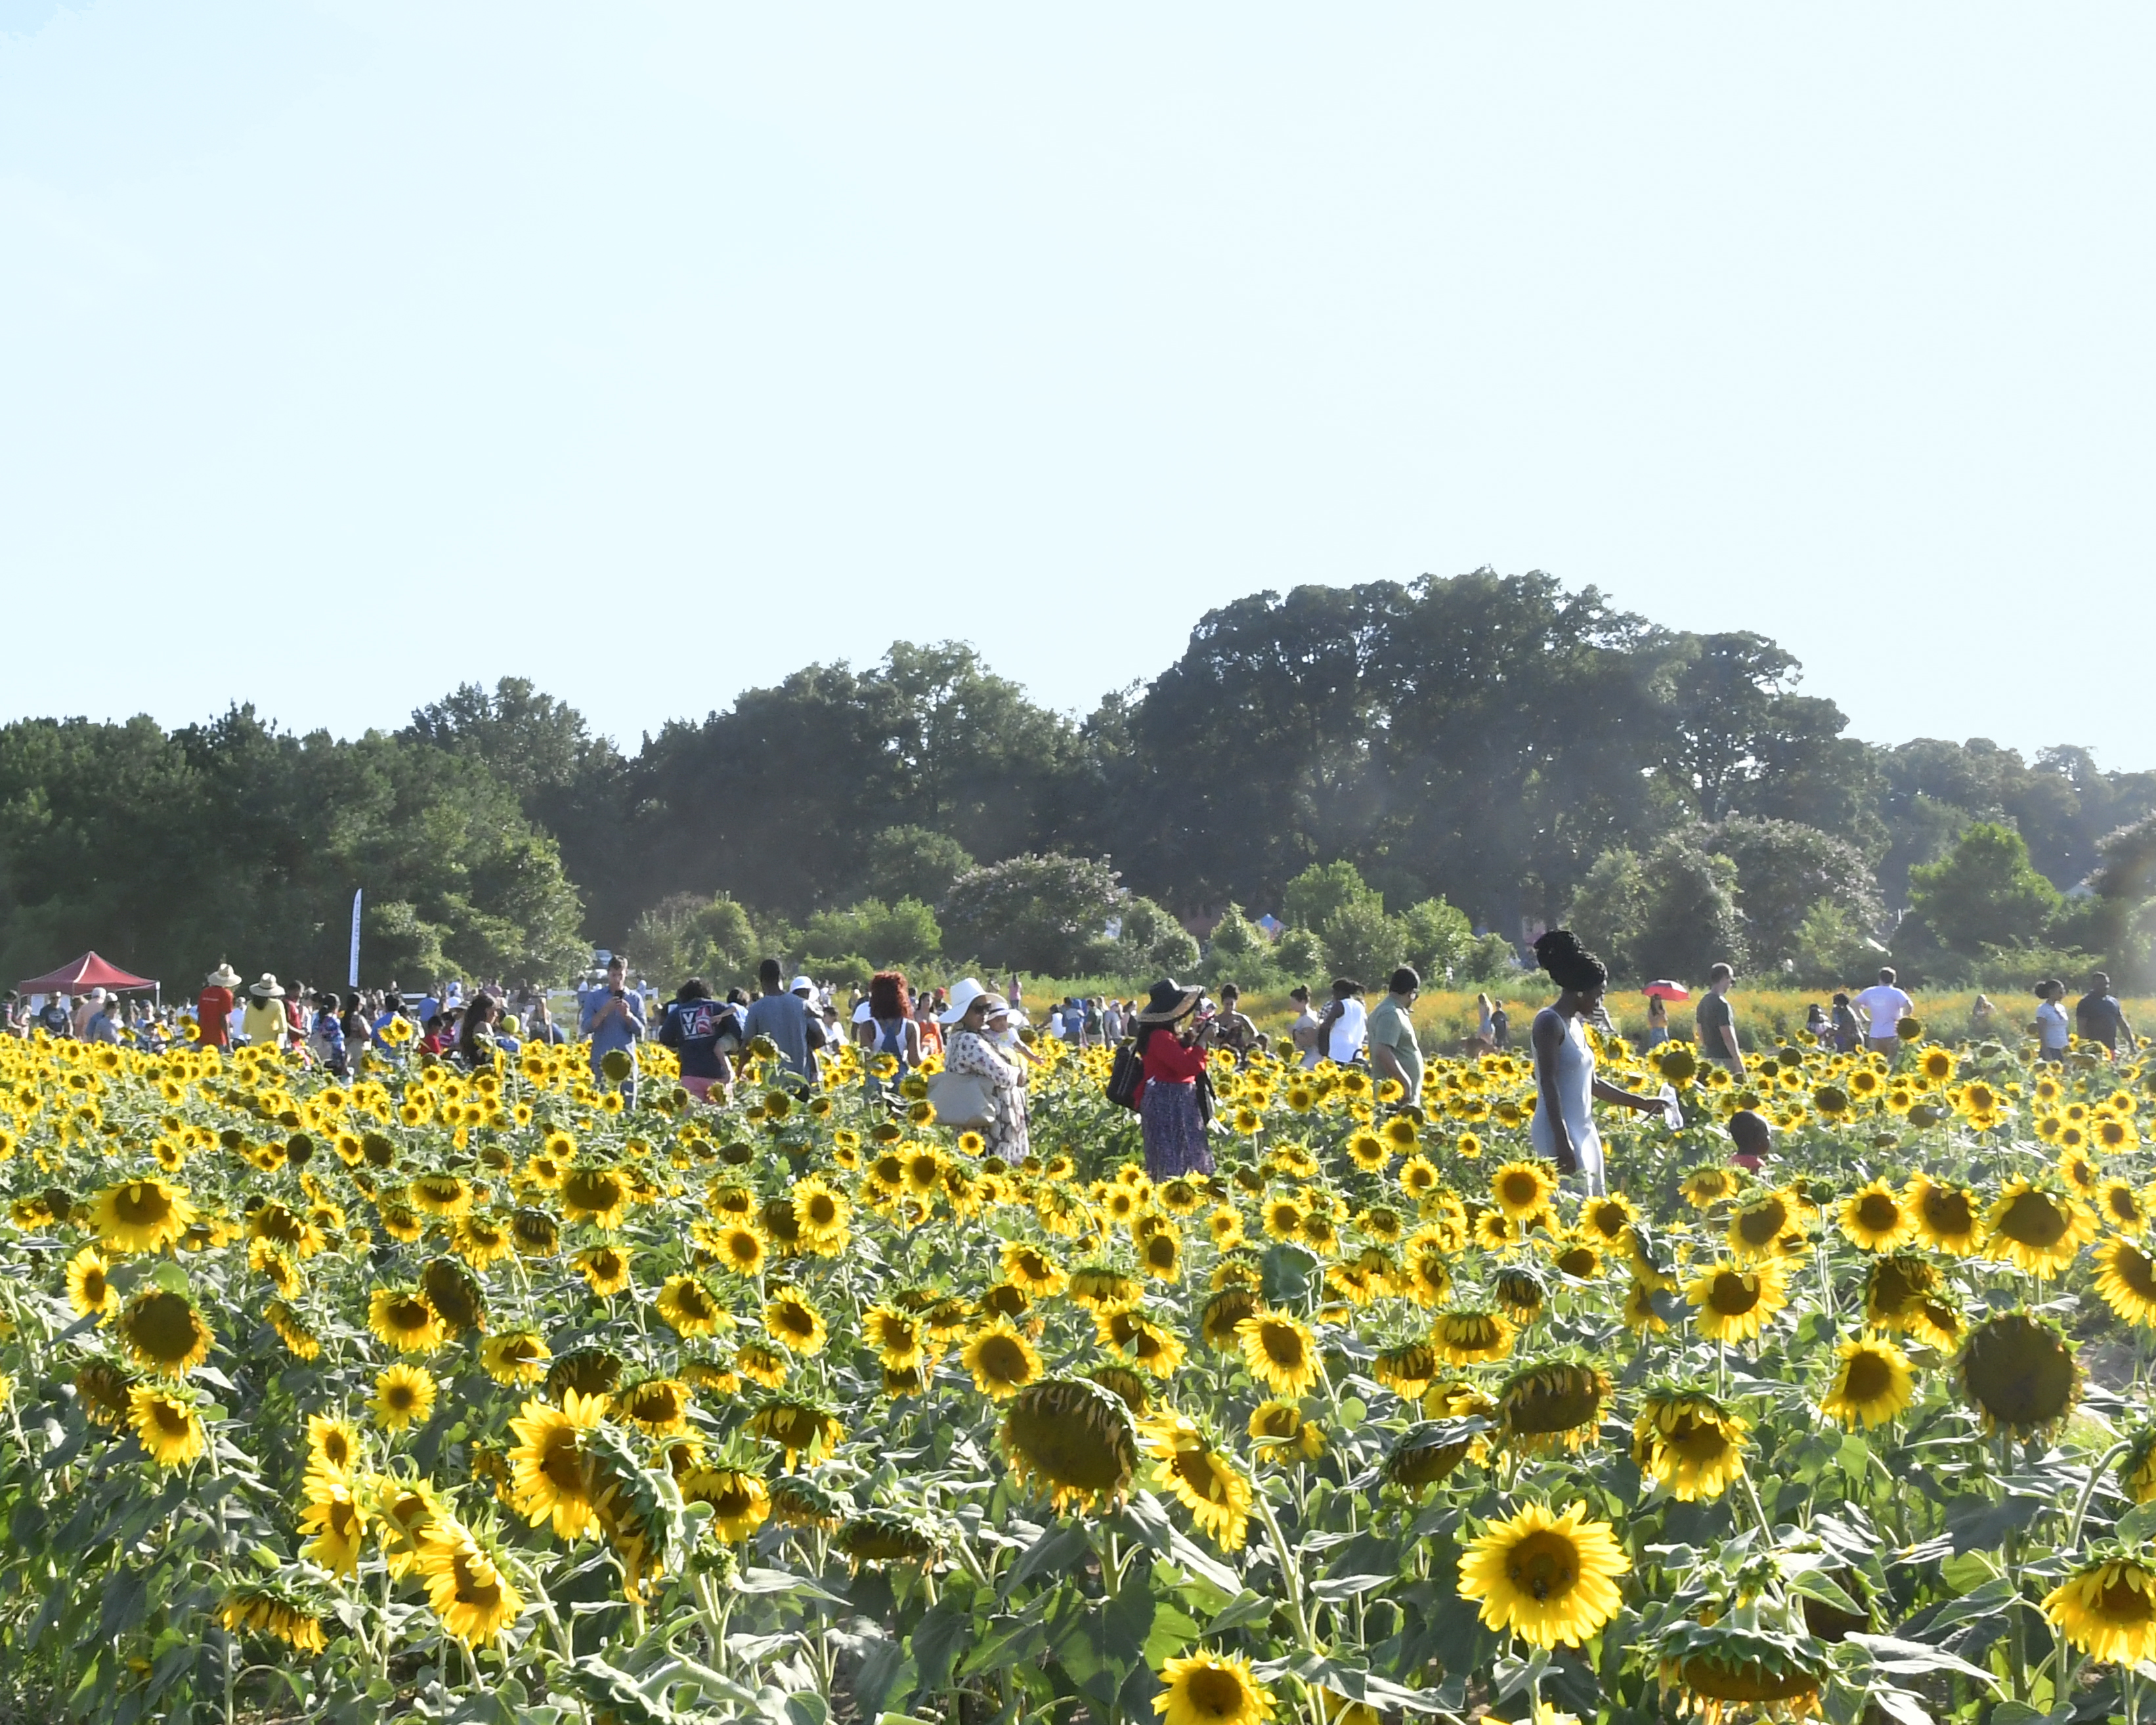 Park visitors enjoying walking through the sunflower field during Dix Park's SunFest event 